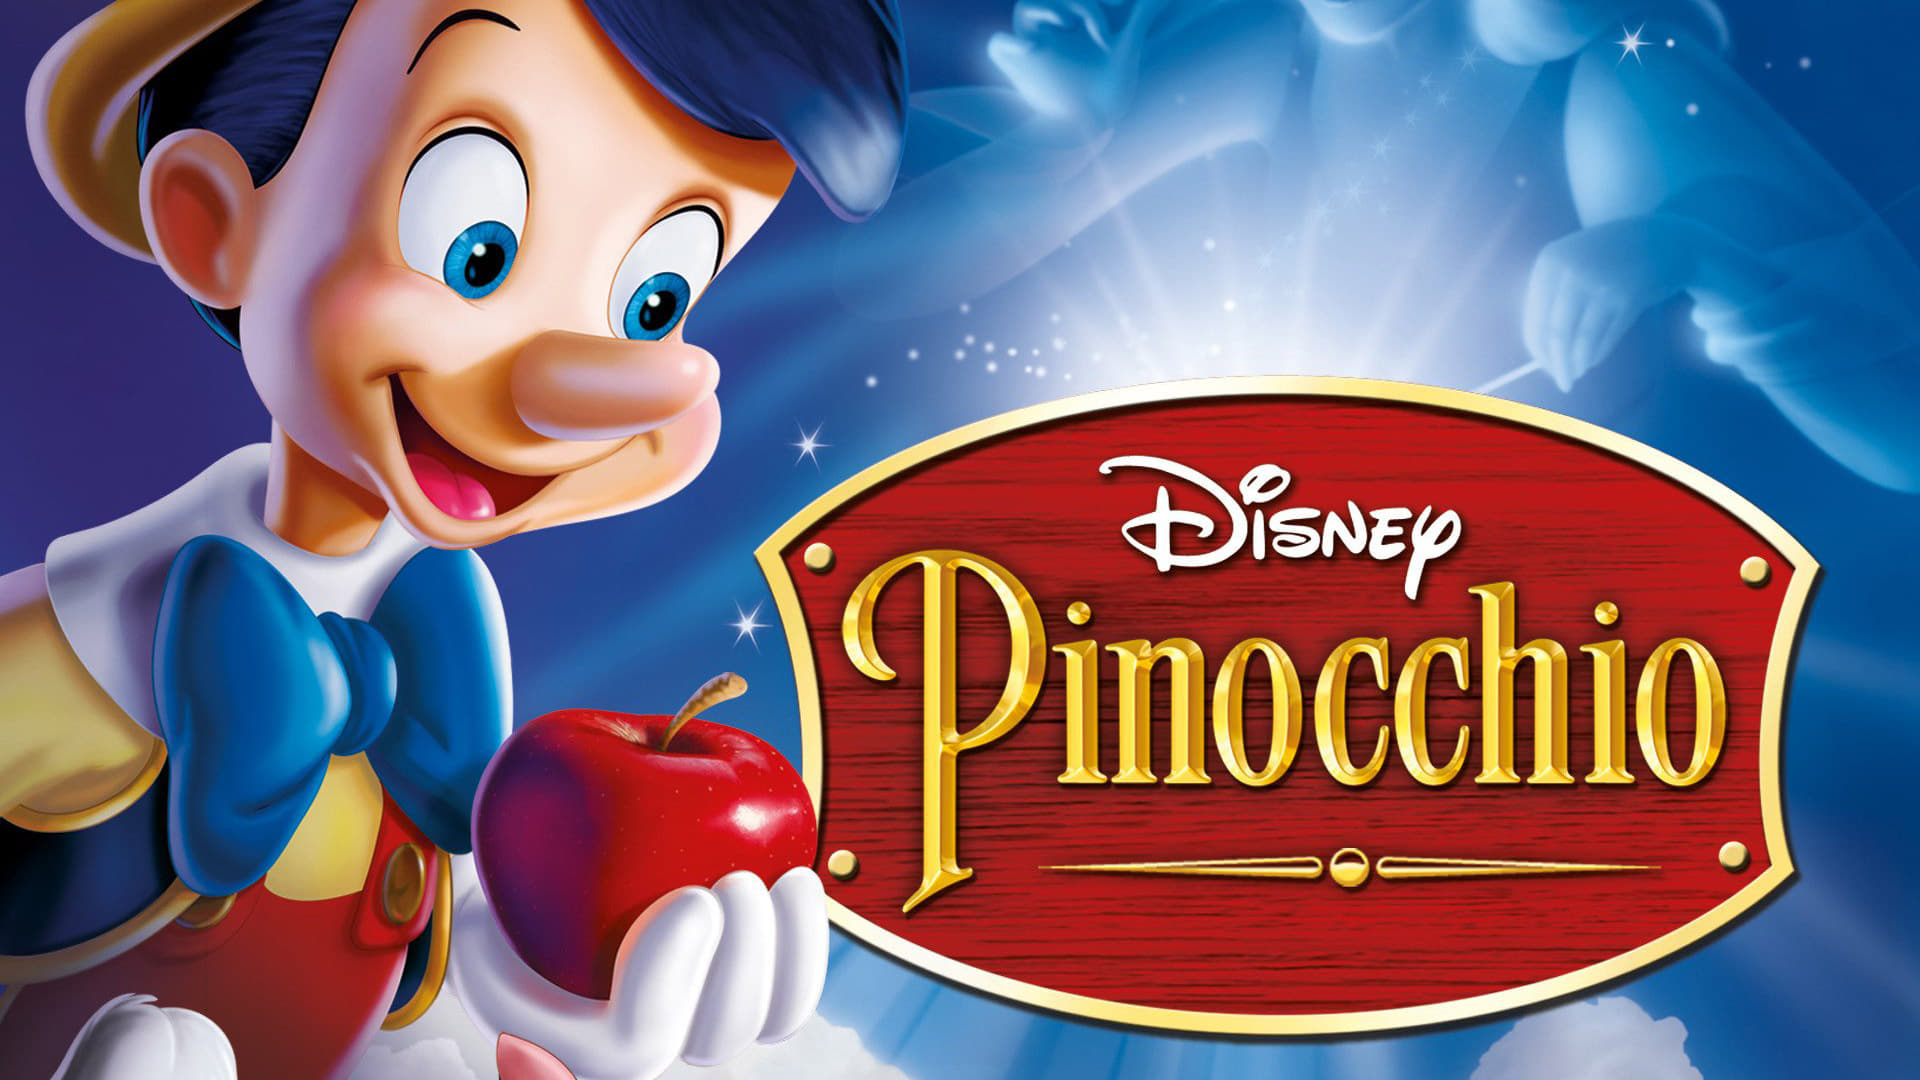 Pinocho (1940)